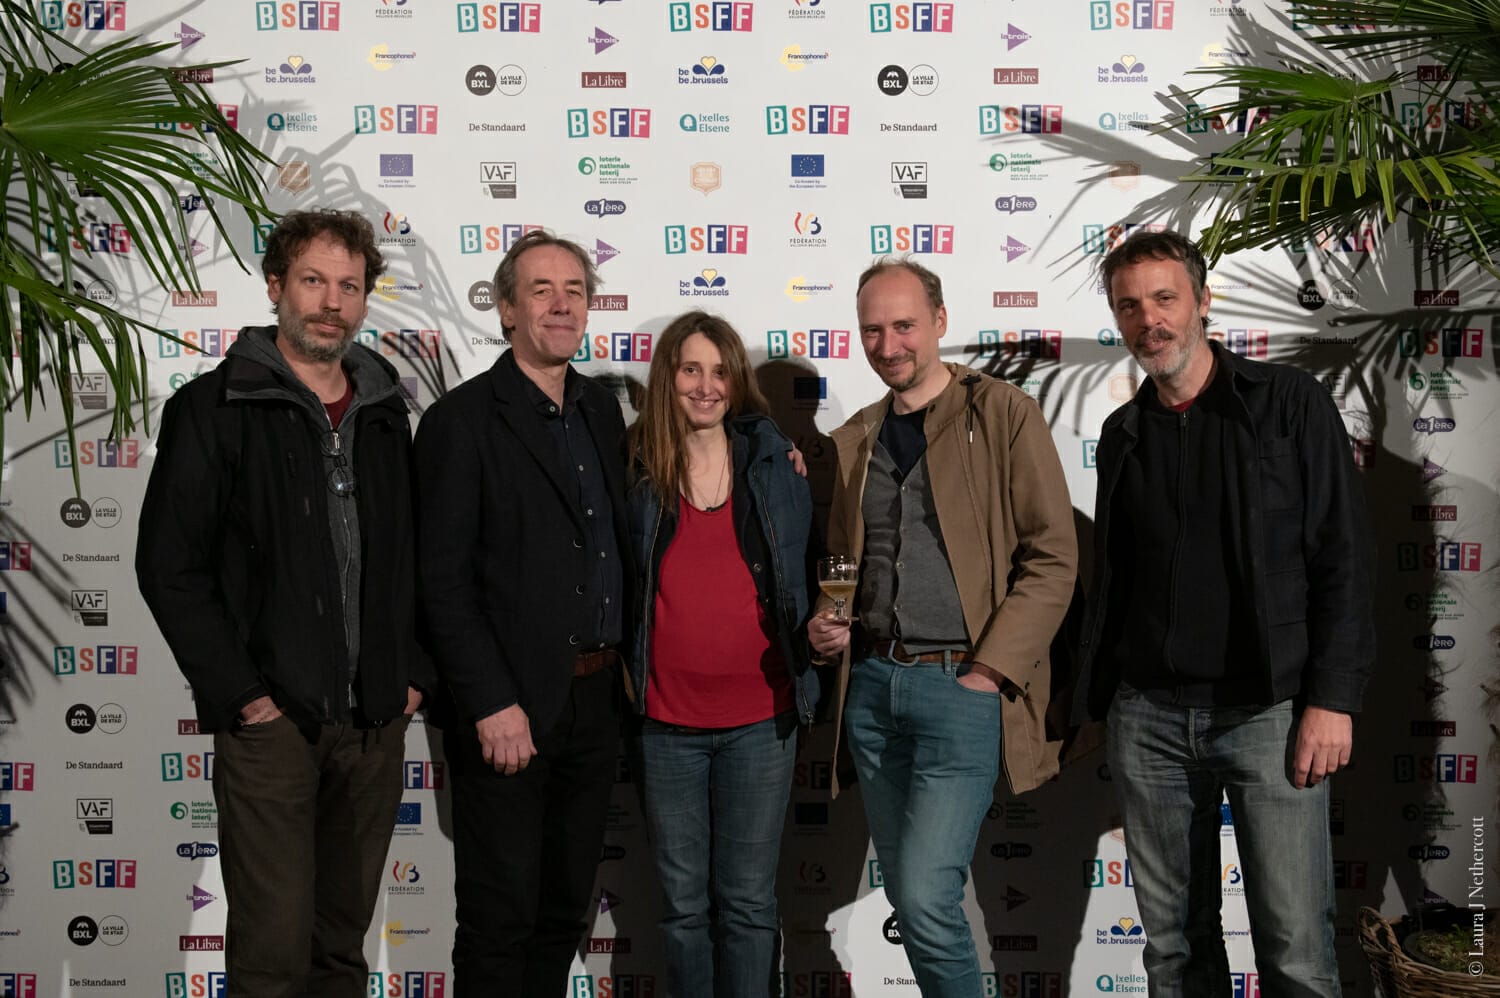 BSFF 2023 - Day 5 - Director Sarah Gouret and her film crew